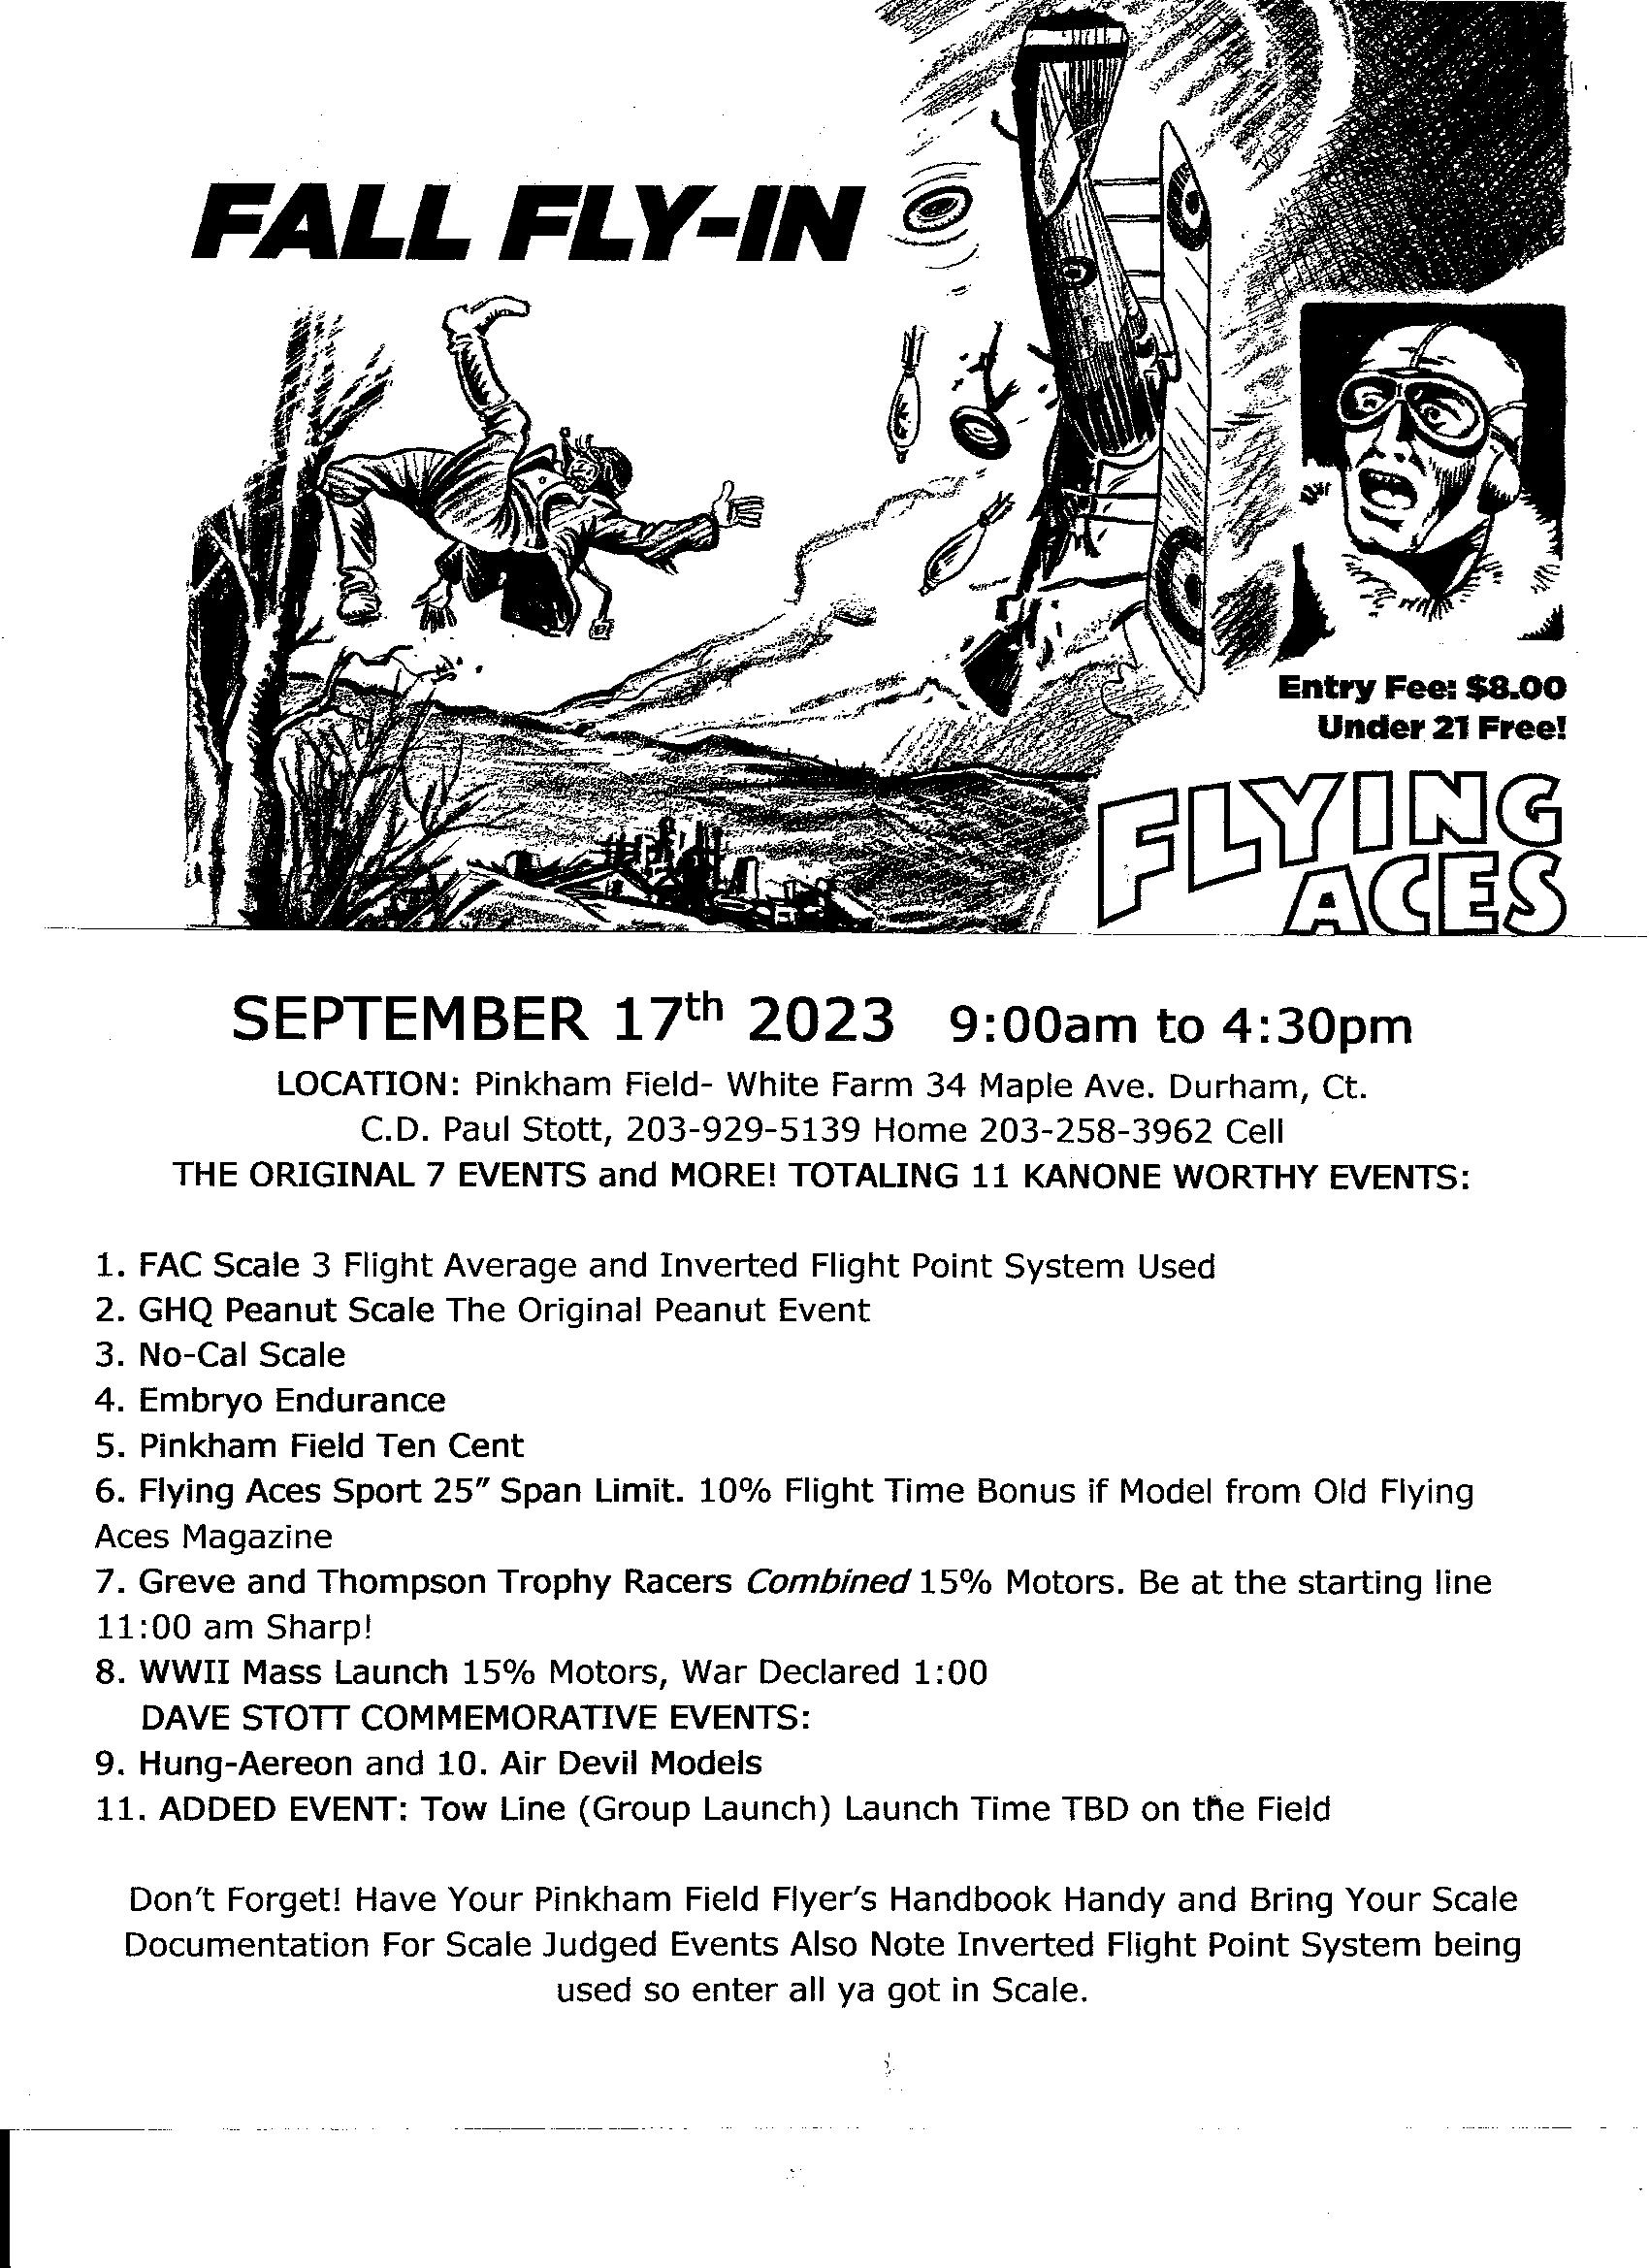 September 17, 2023 Fall Fly-In Meet - Durham CT